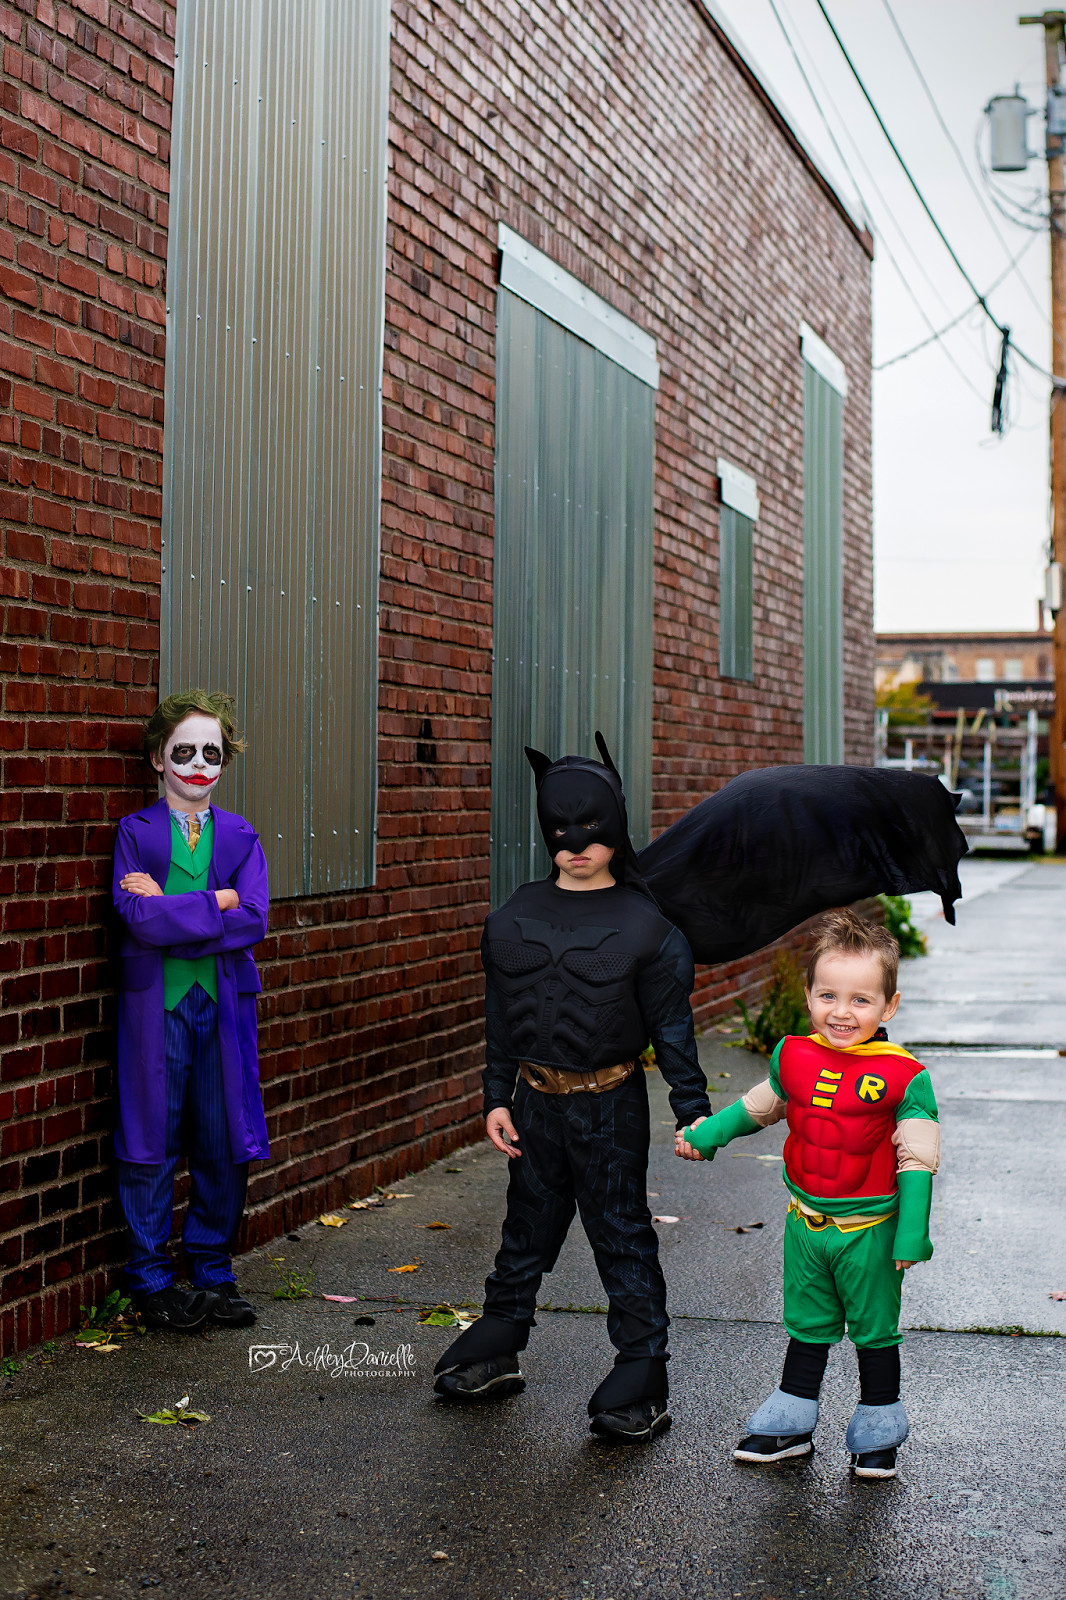 DIY Batman Costume Toddler
 DIY Joker make up batman family costume toddler Robin